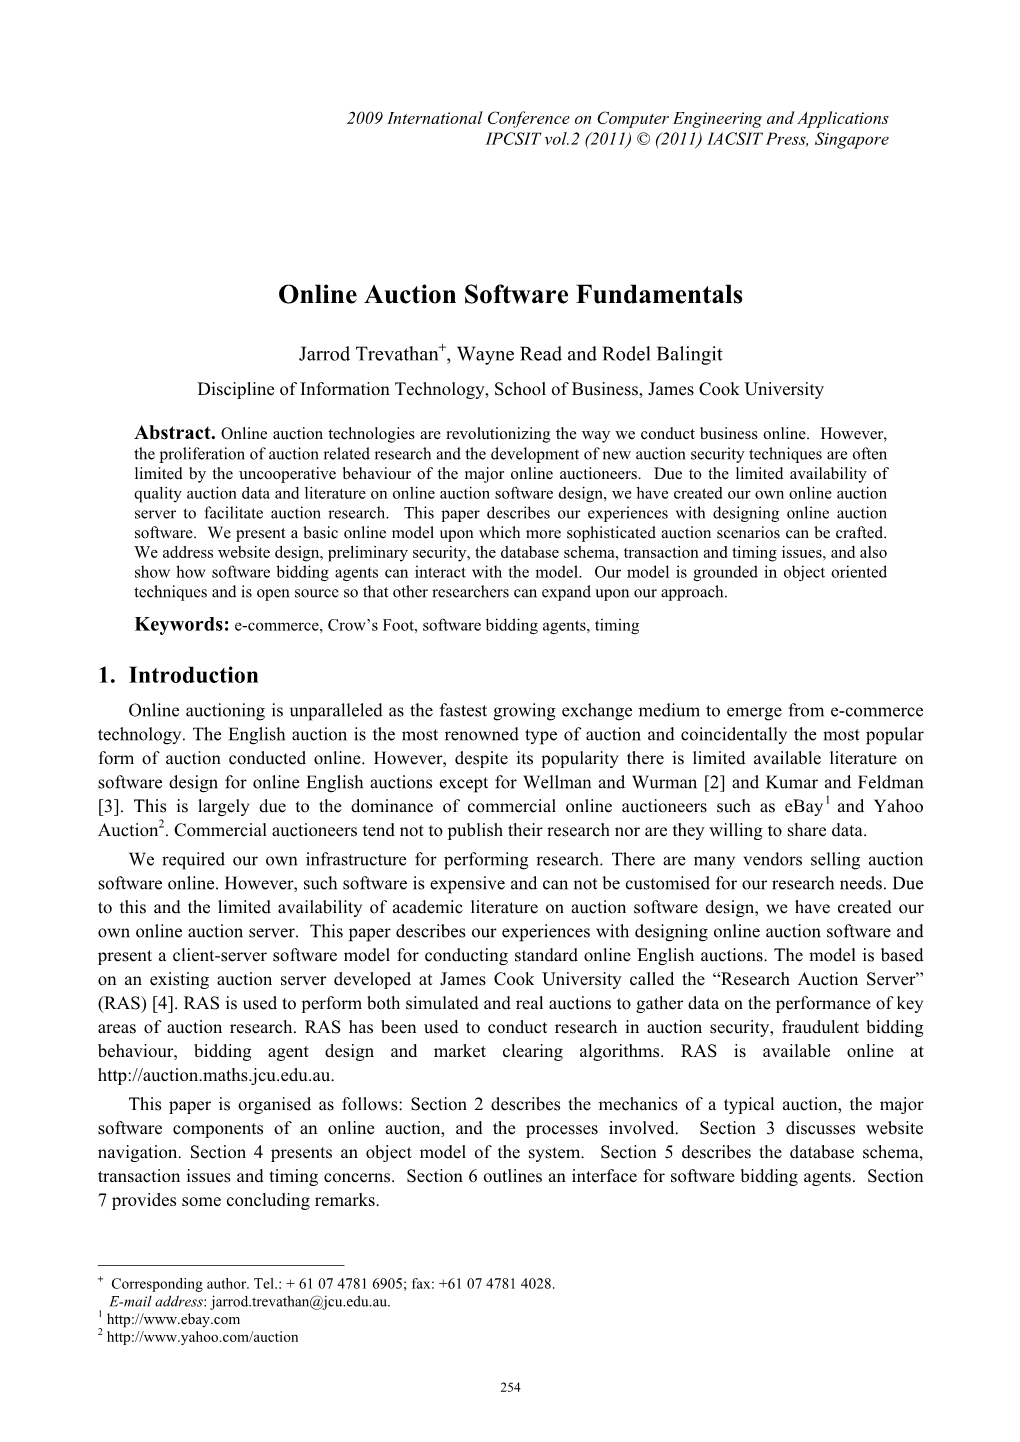 Online Auction Software Fundamentals